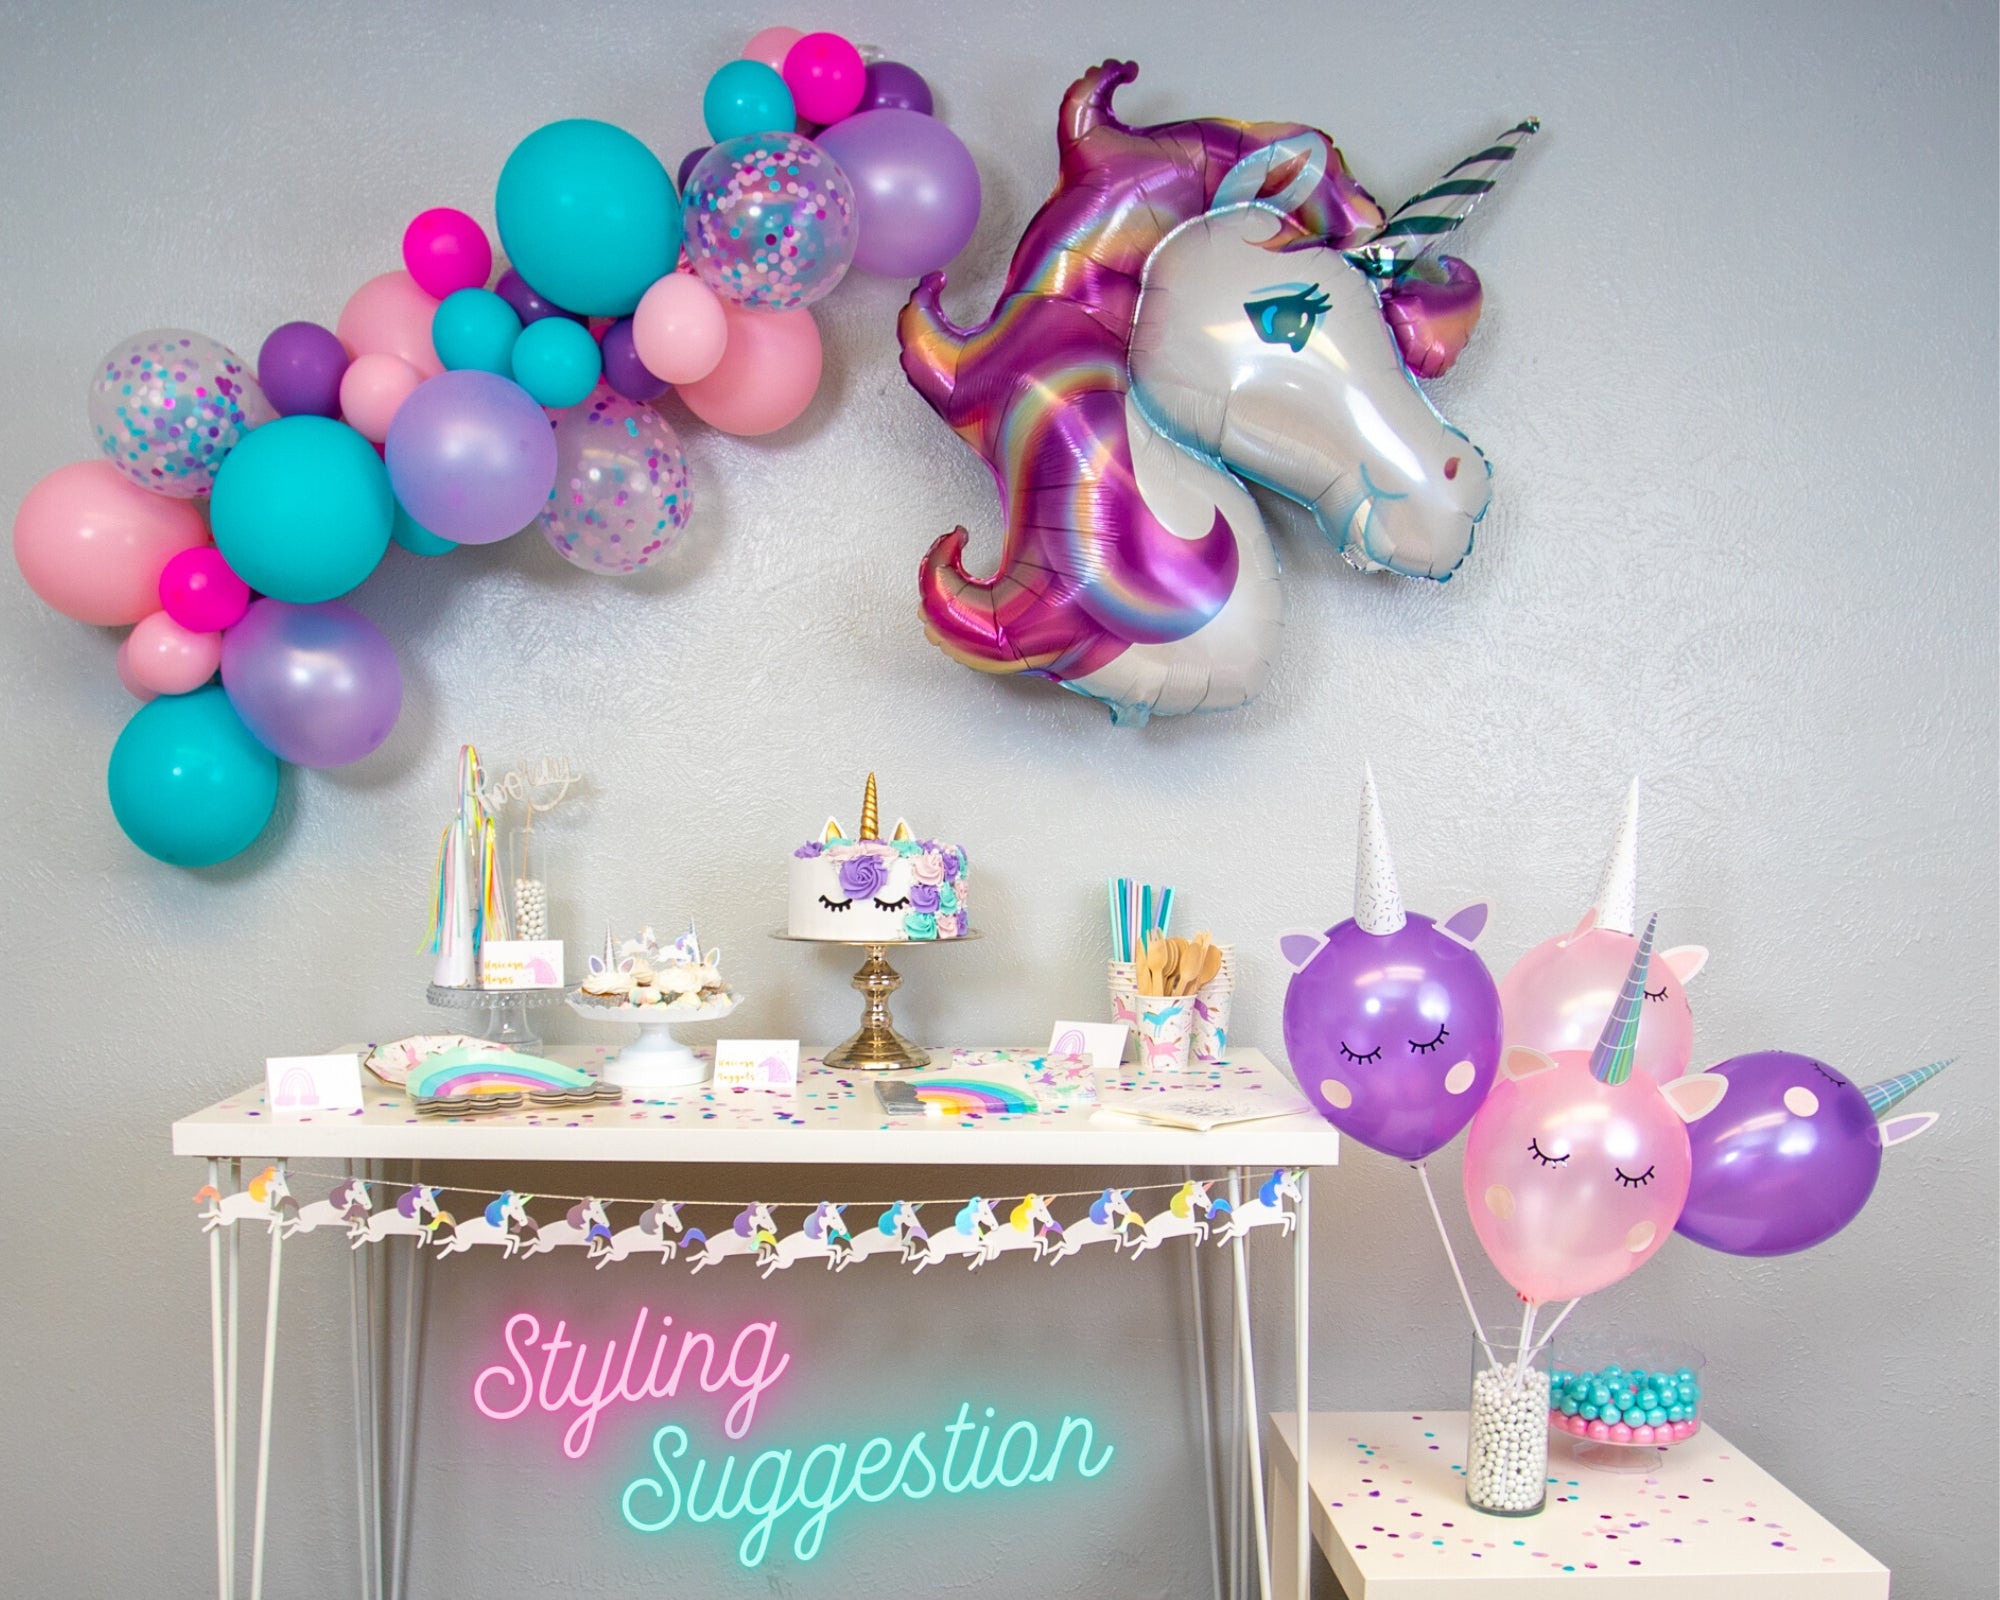 Pastel Rainbows.  Rainbow birthday party, Unicorn birthday parties, Rainbow  party decorations